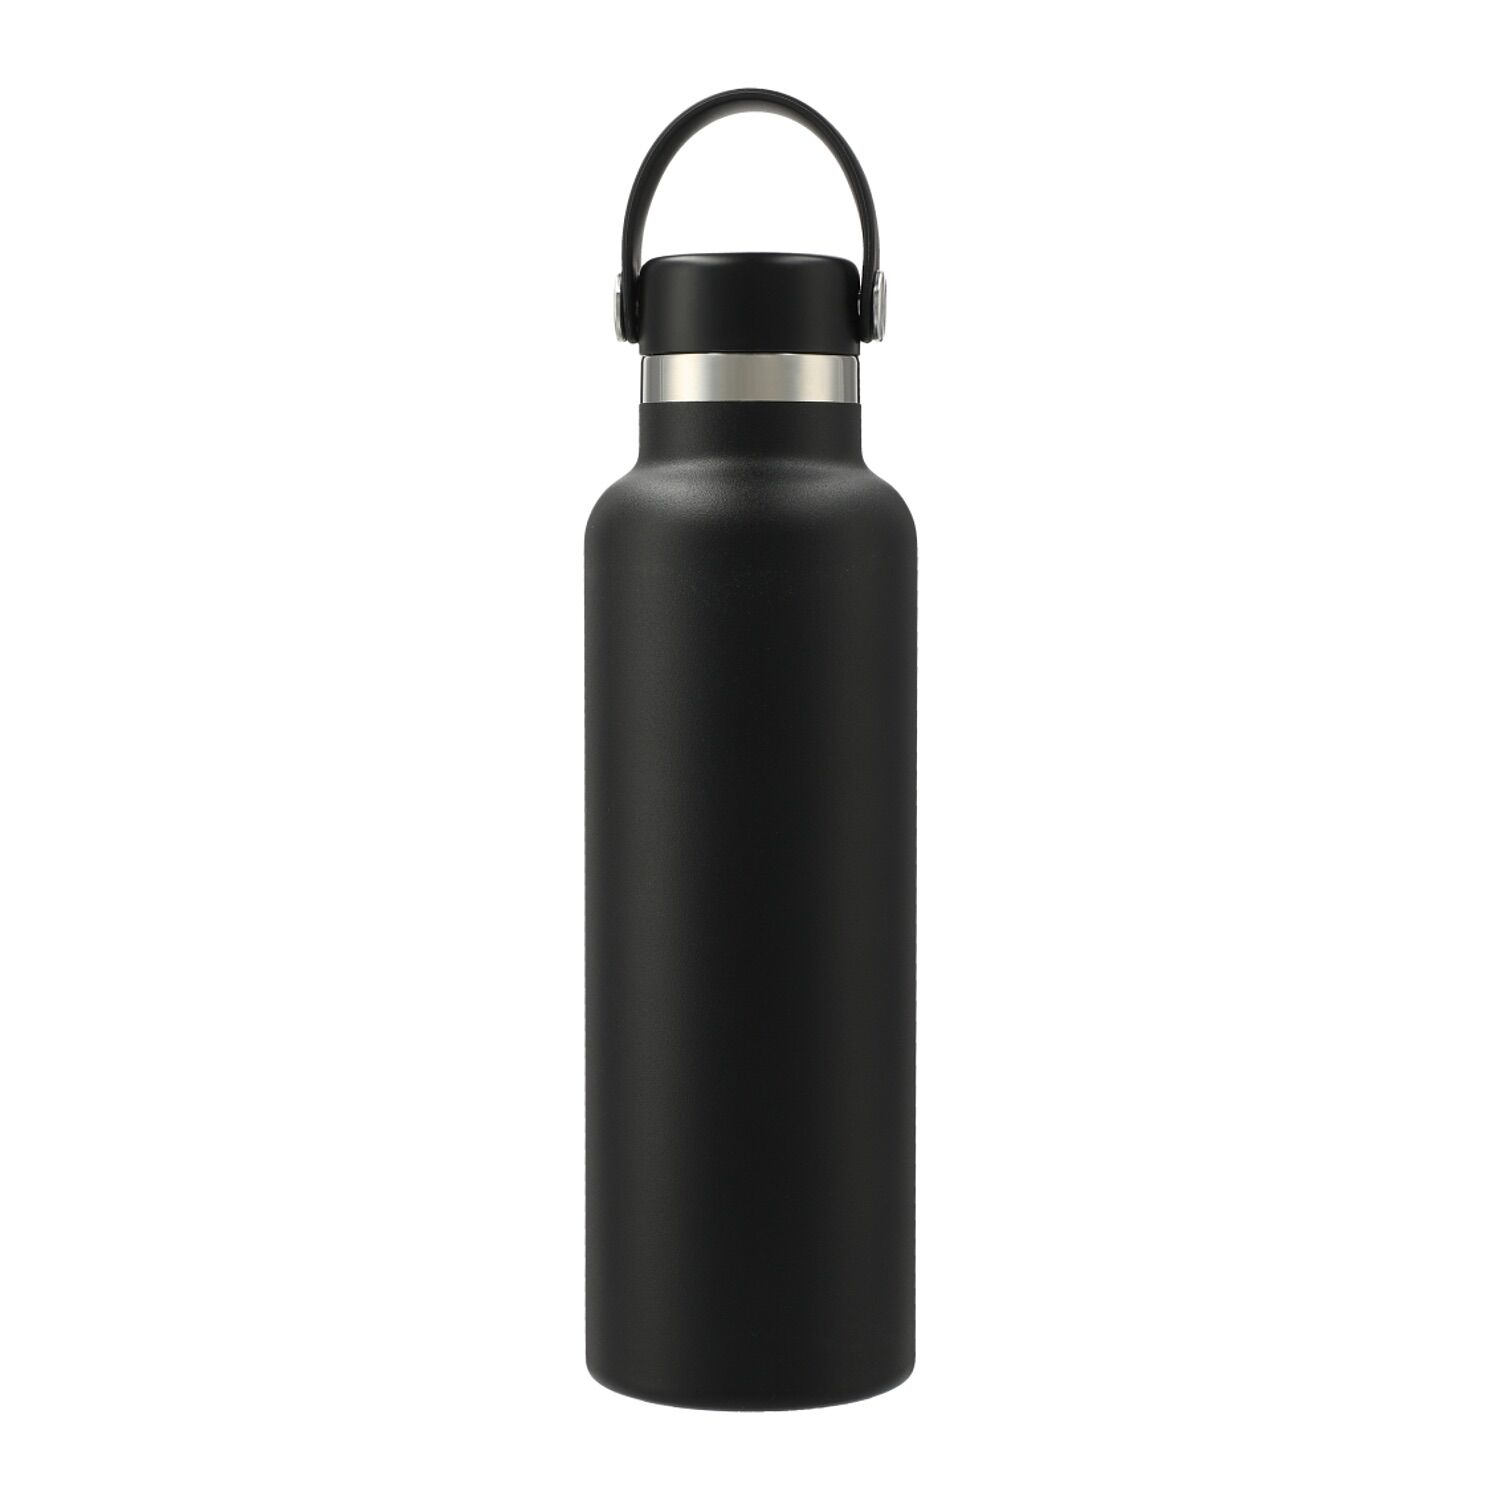 https://www.drivemerch.com/wp-content/uploads/2022/08/branded-hydro-flask-standard-mouth-with-flex-cap-21-oz-black.jpg